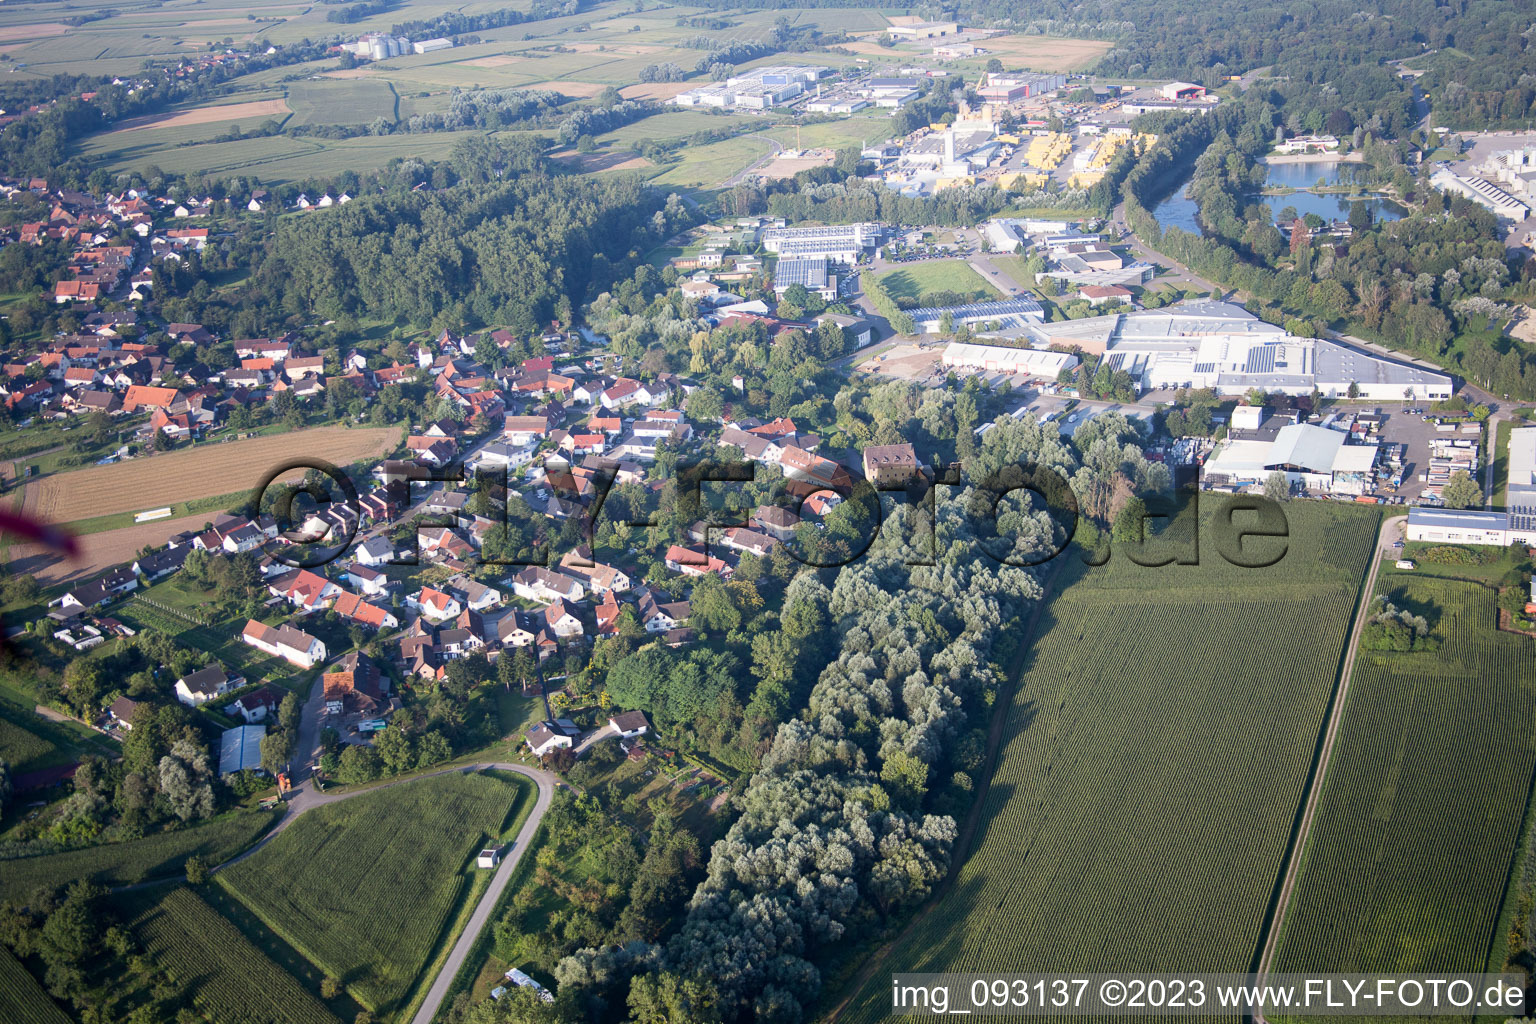 District Freistett in Rheinau in the state Baden-Wuerttemberg, Germany seen from above